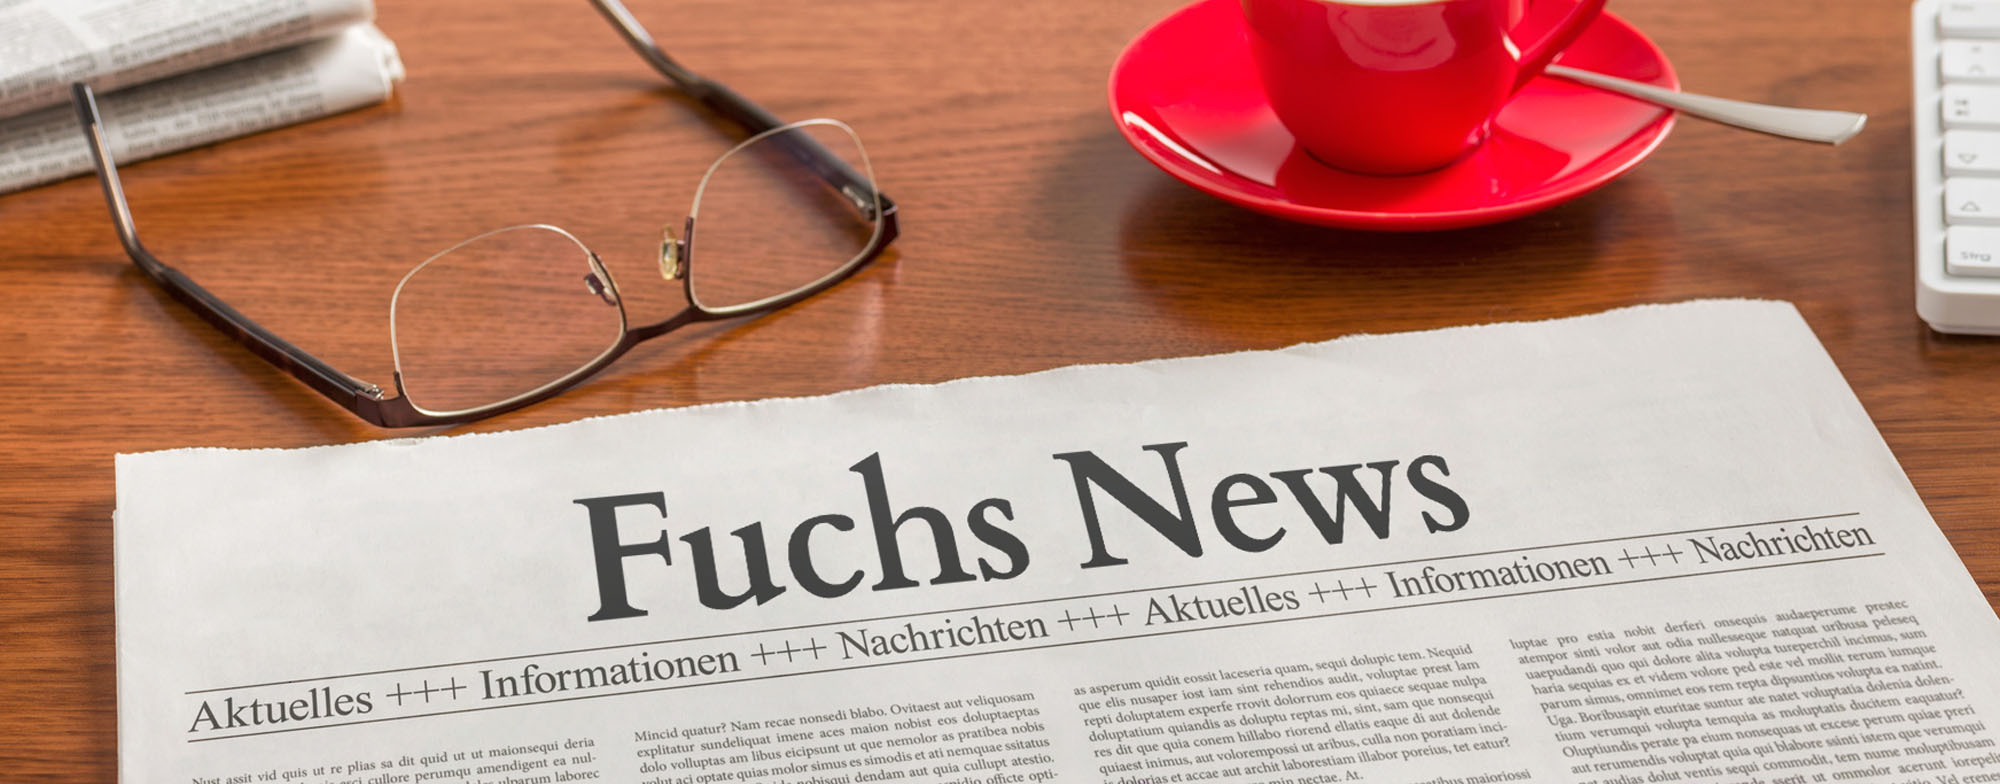 Fuchs GmbH